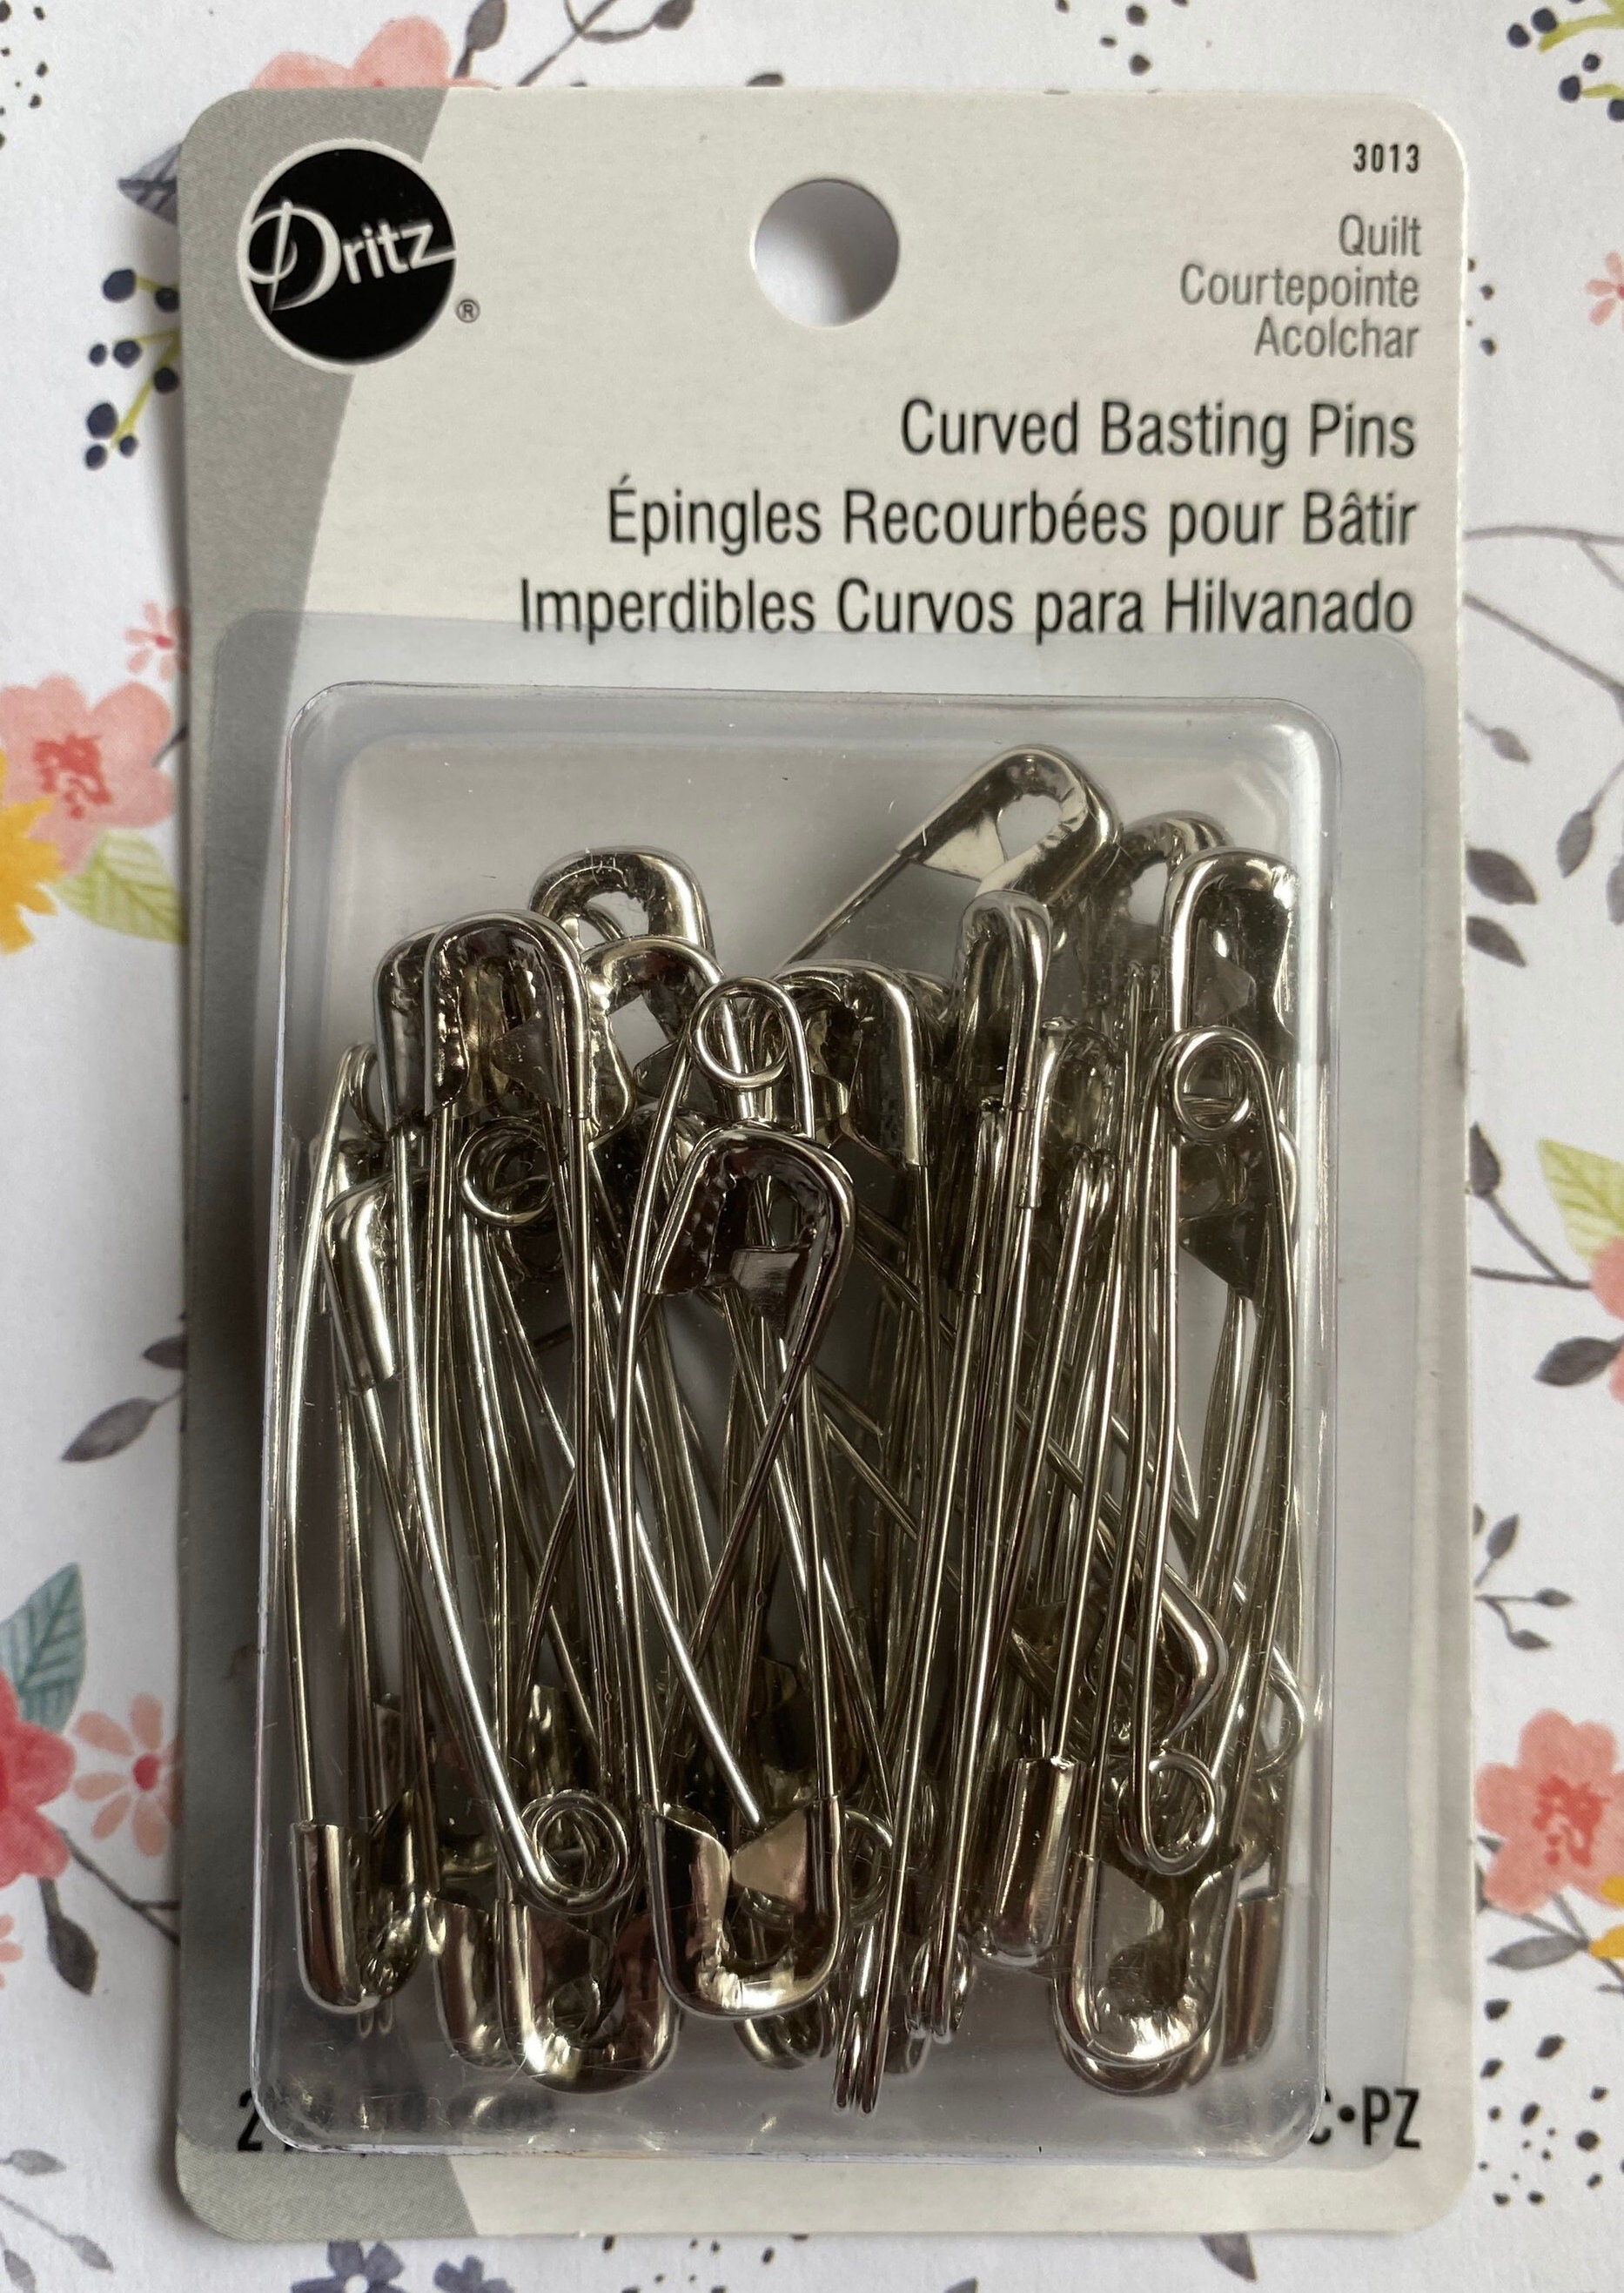  Safety Pins - Black Safety Pins Size #3 - Length 2 (50 Pins /Bag)